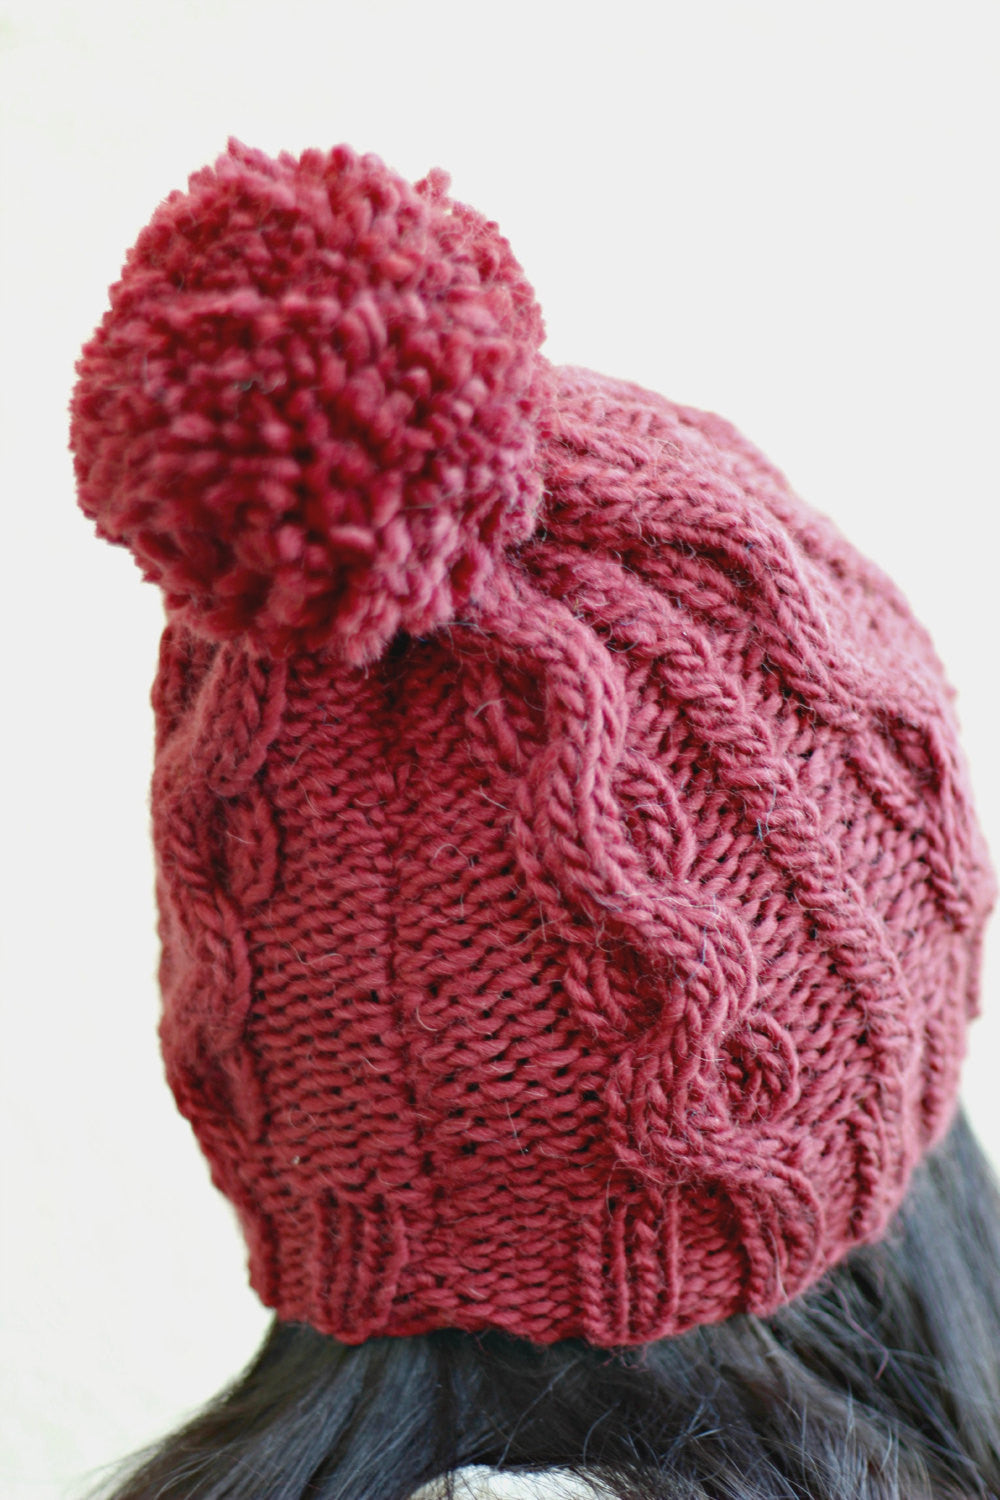 Wine red knit hat